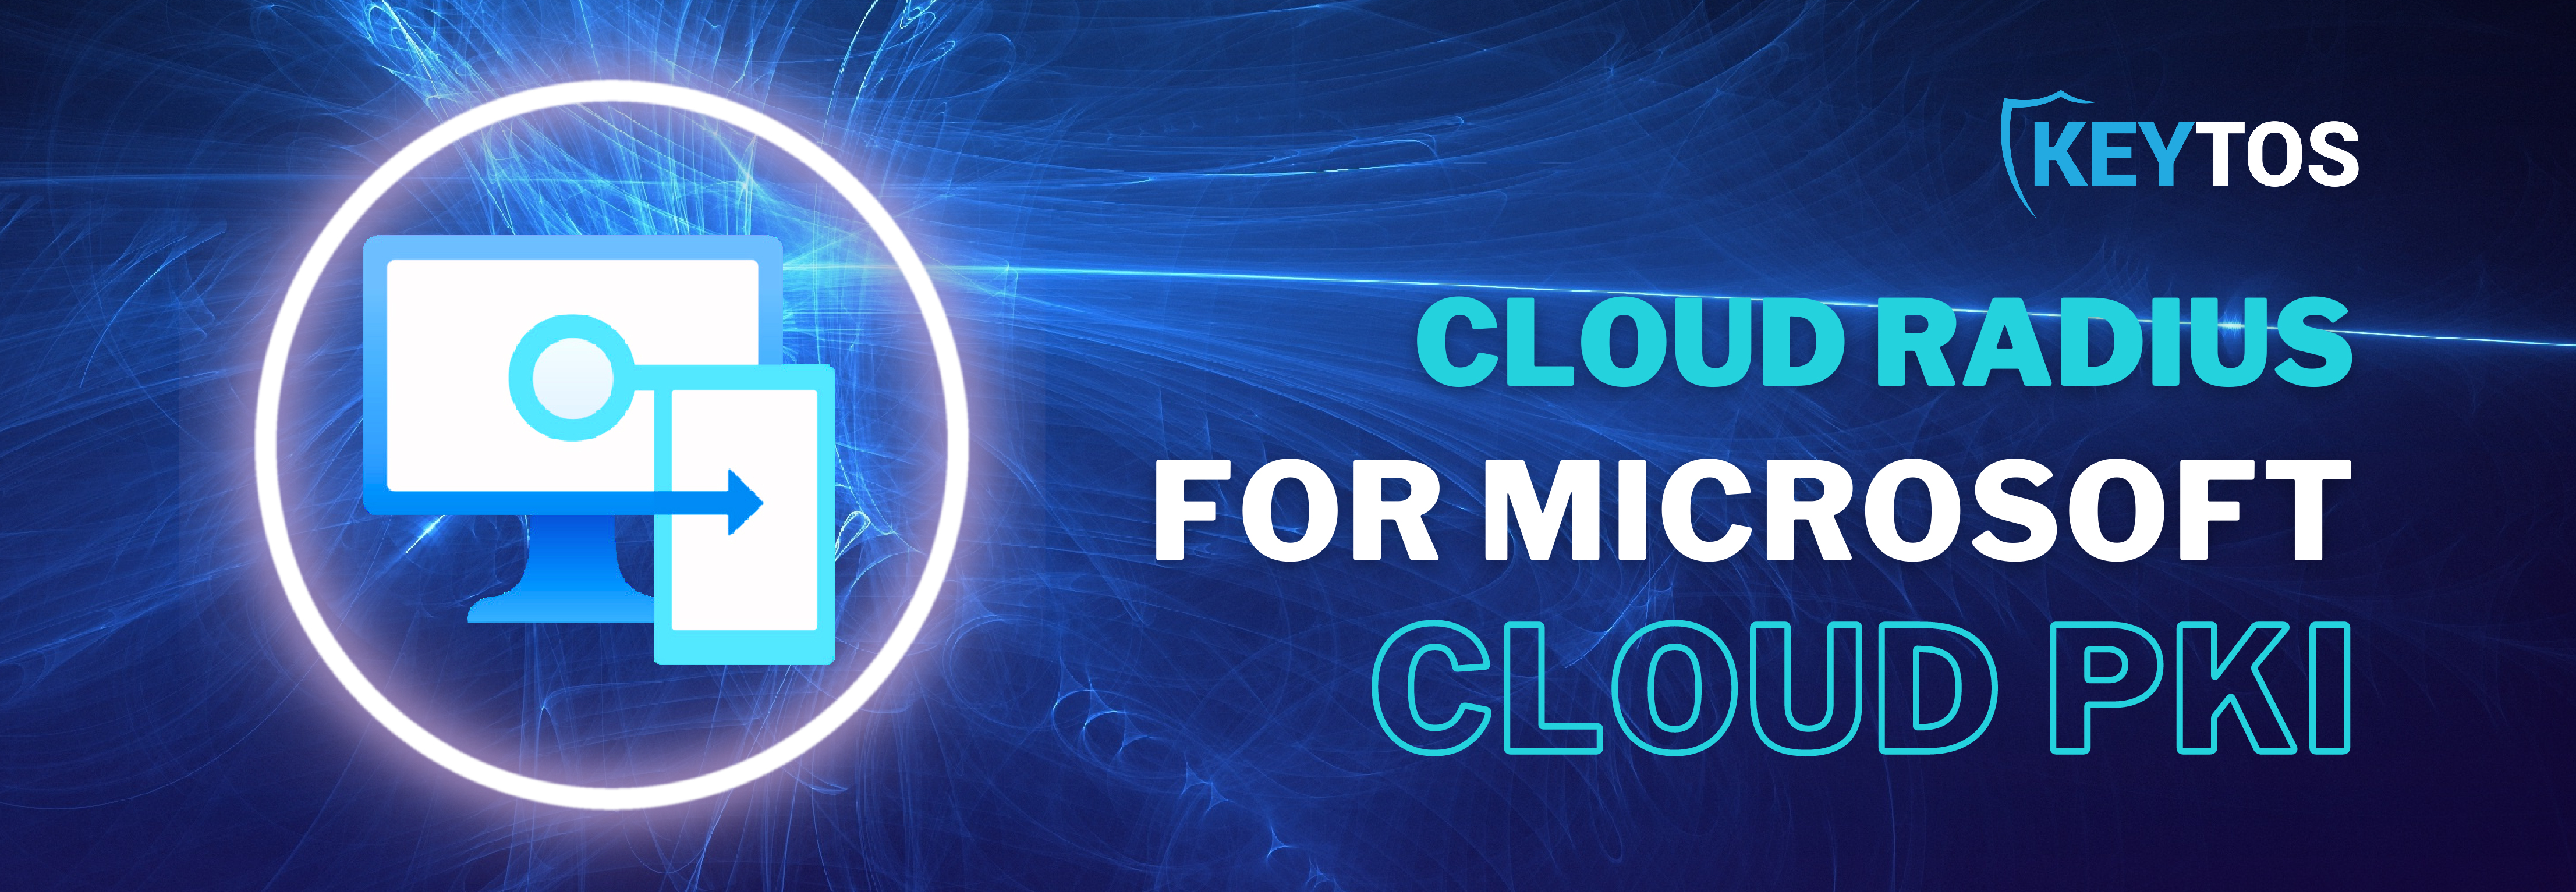 How To Setup Cloud RADIUS for Microsoft Cloud PKI Intune in Azure